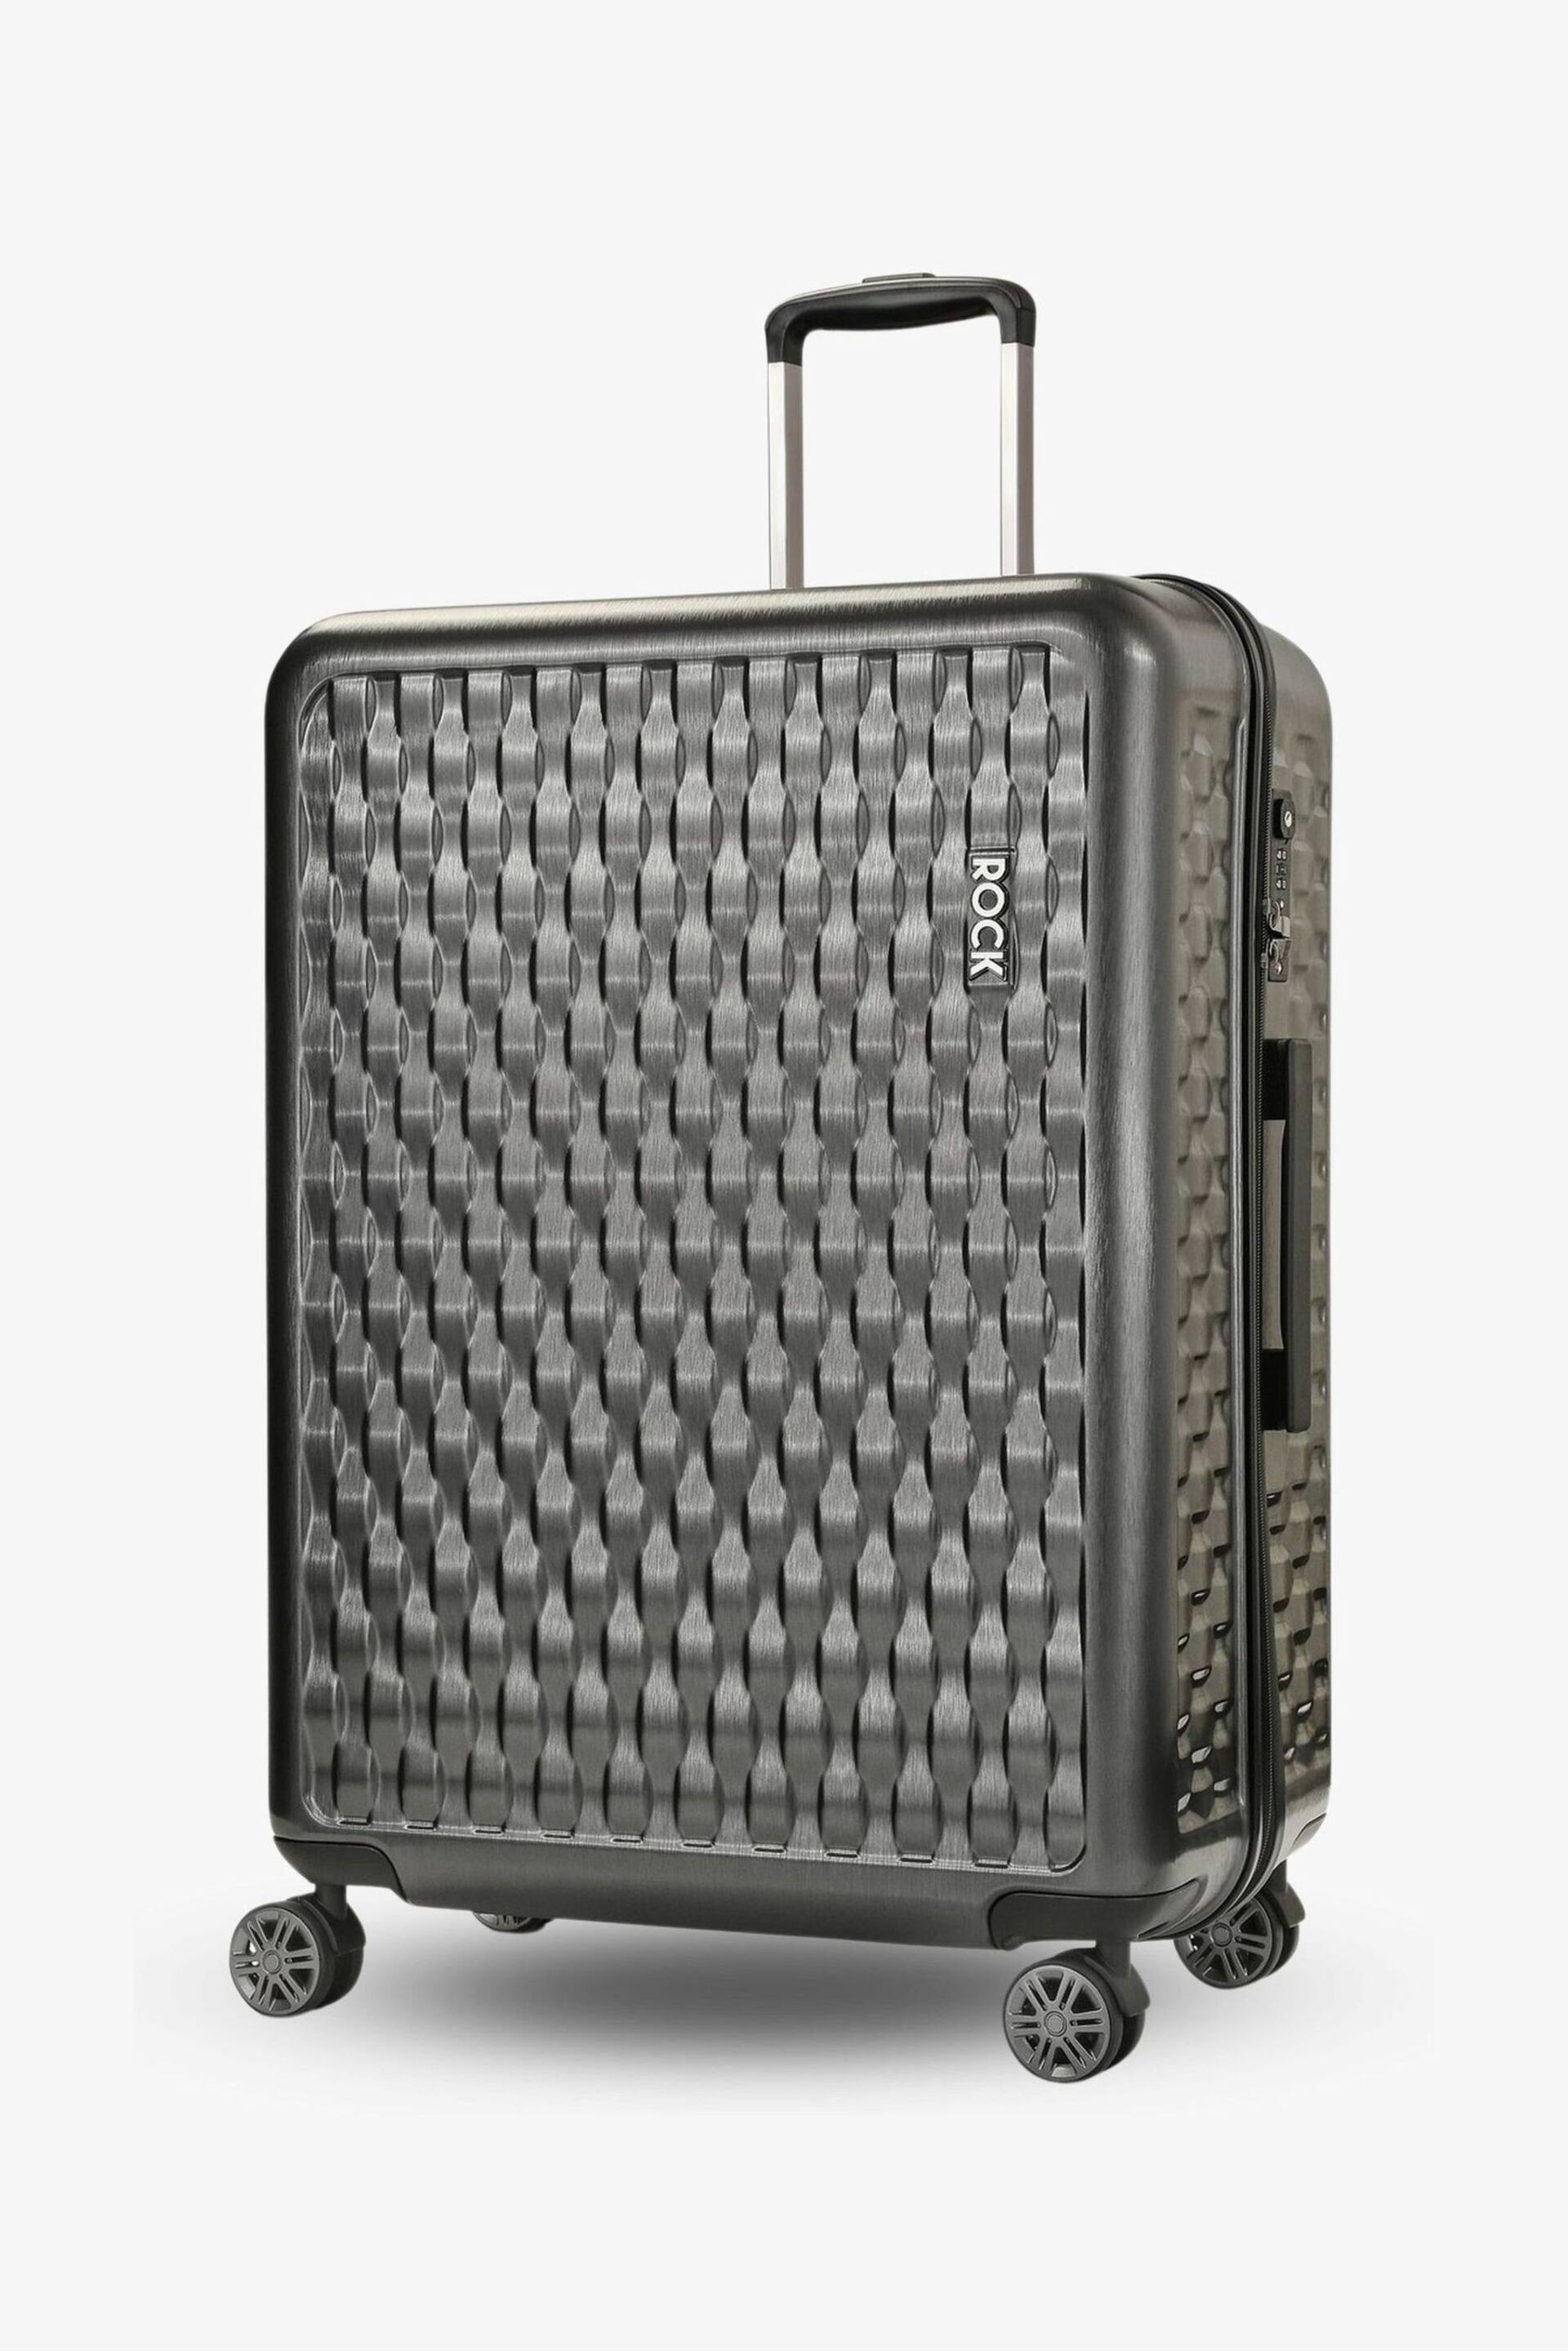 Rock Luggage Allure Large Suitcase - Image 1 of 1